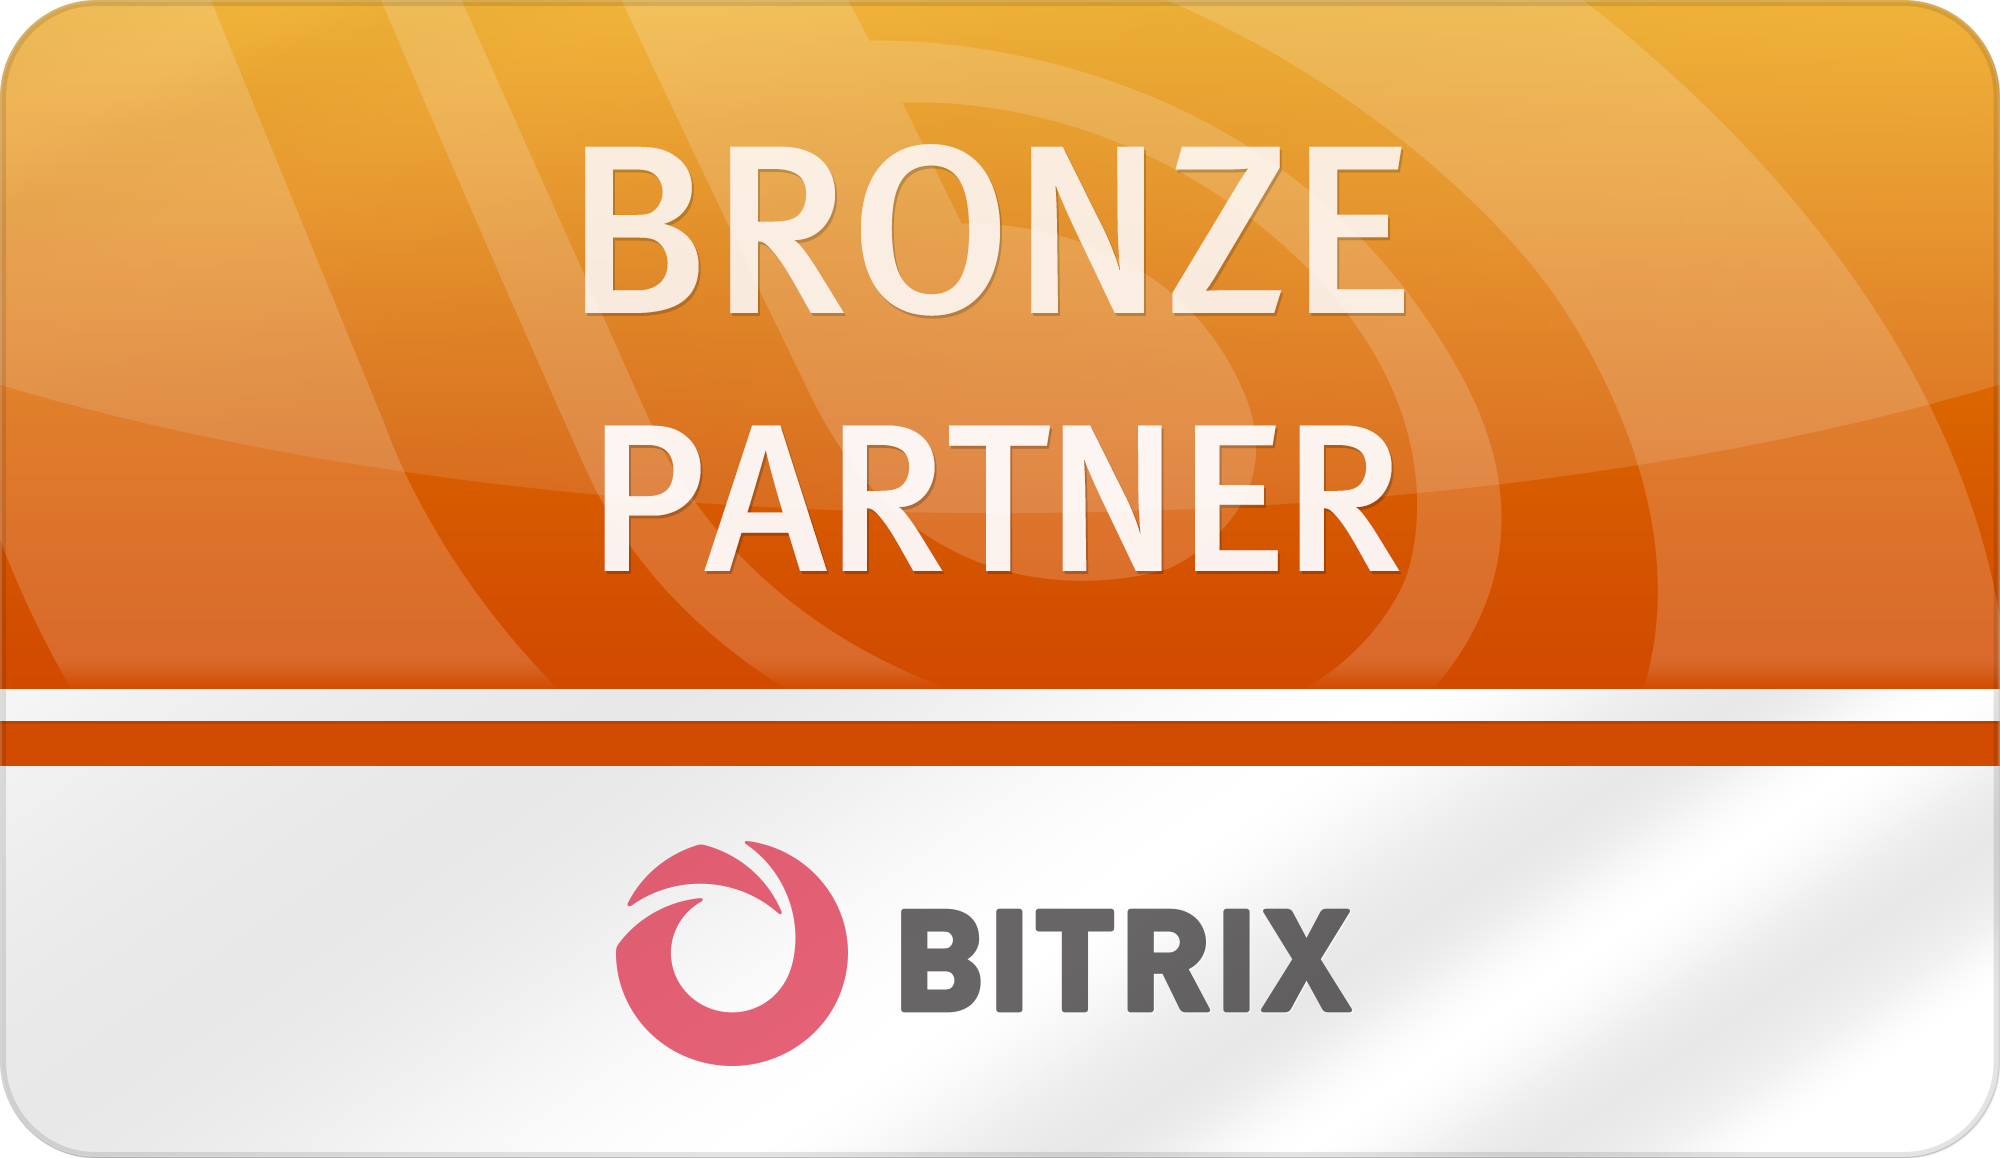 Btrix24 partner